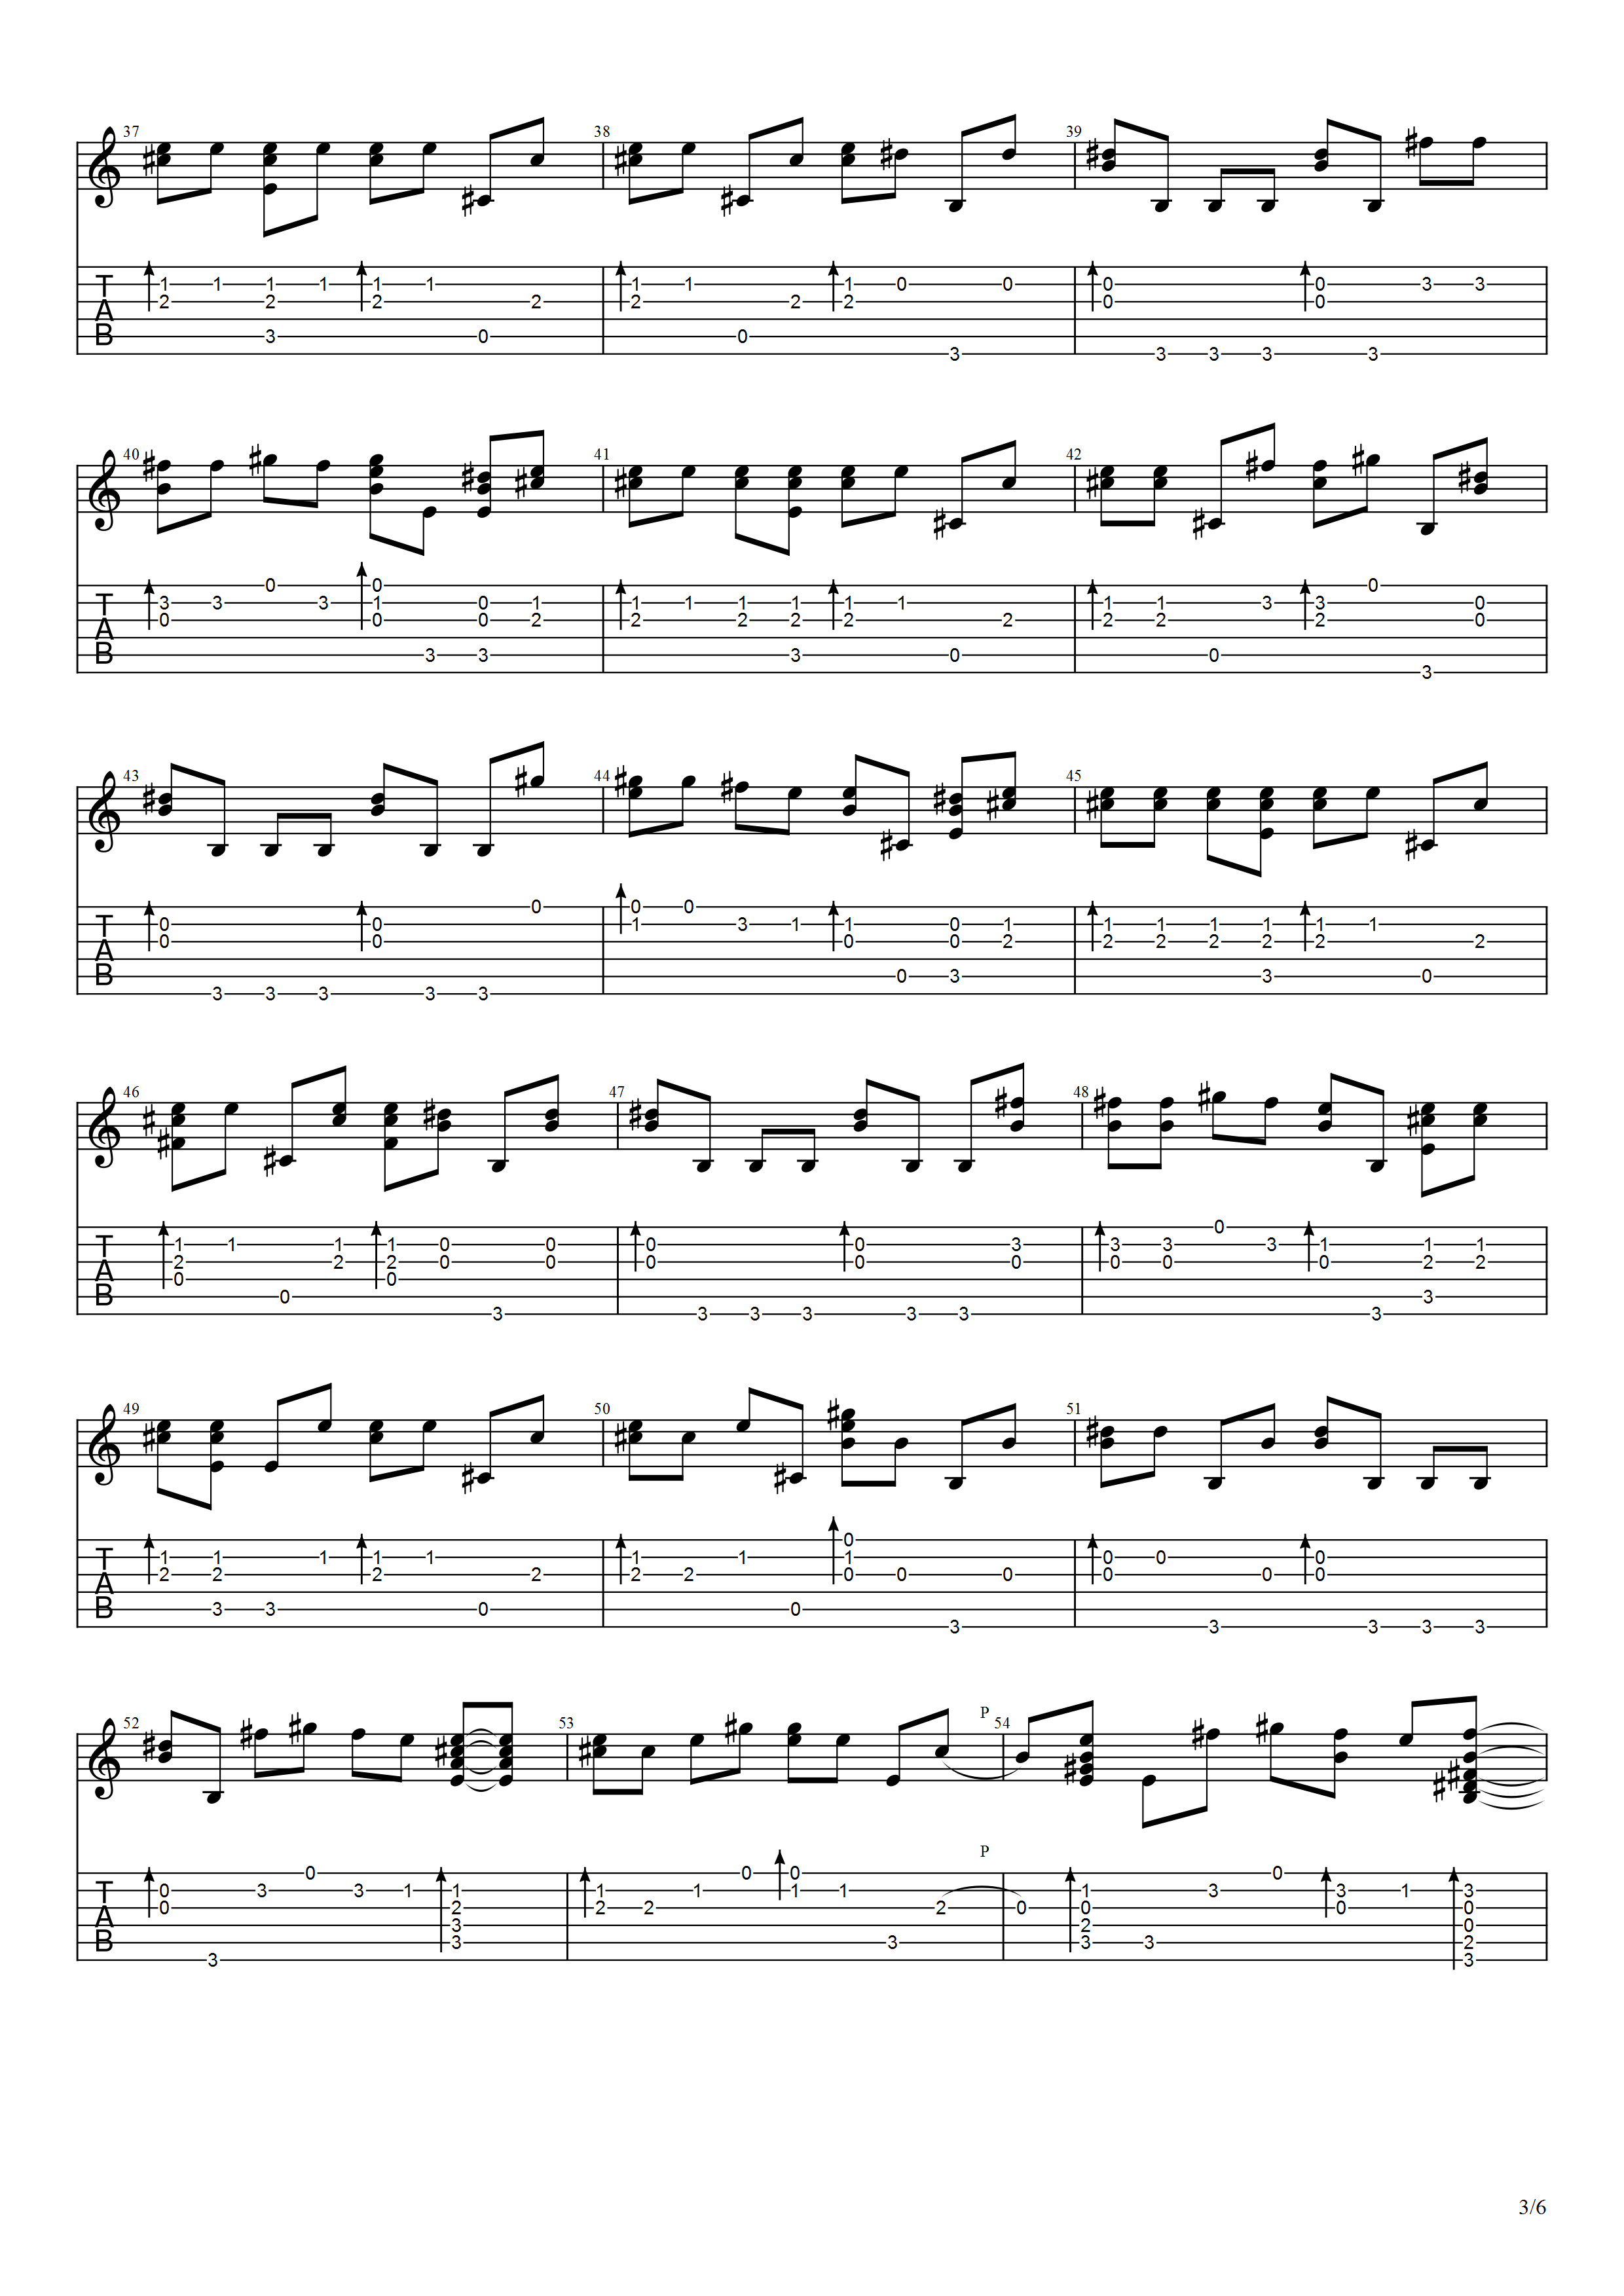 《August》最简单的C调版吉他谱子 - TaylorSwift和弦谱(弹唱谱) - 原调C调 - 国语版初级吉他谱 - 易谱库